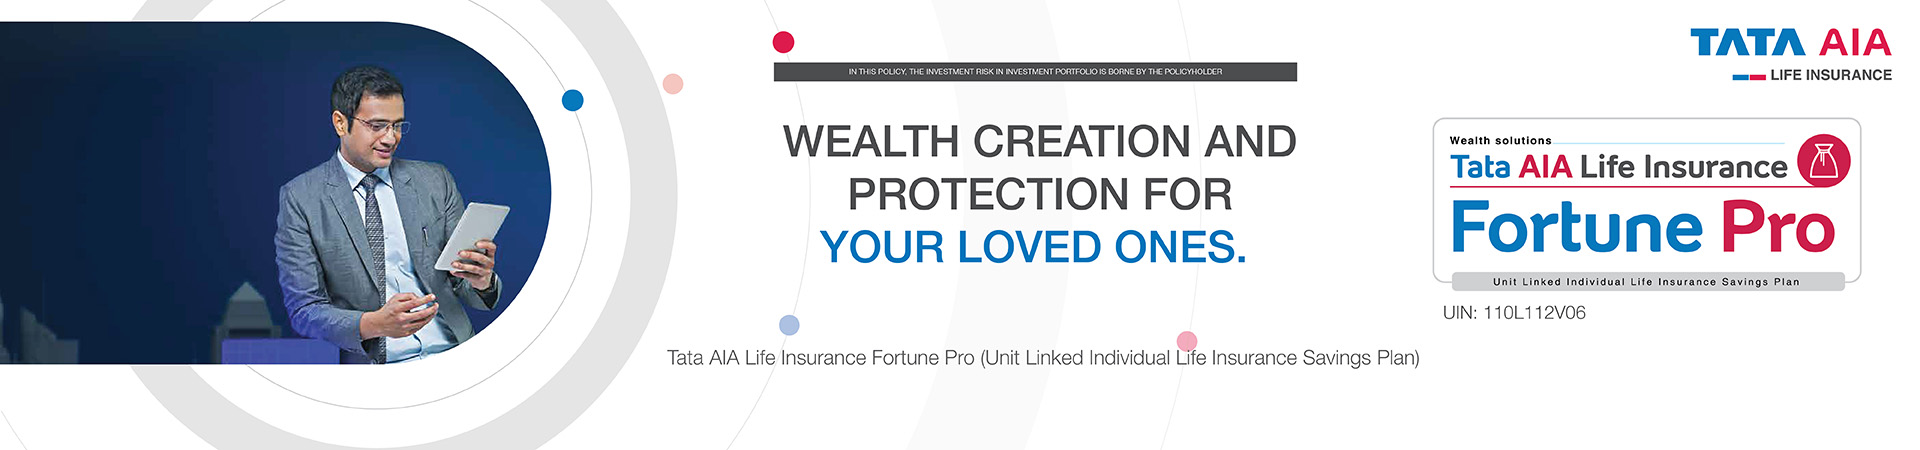 Tata AIA Life Insurance Fortune Pro Plan